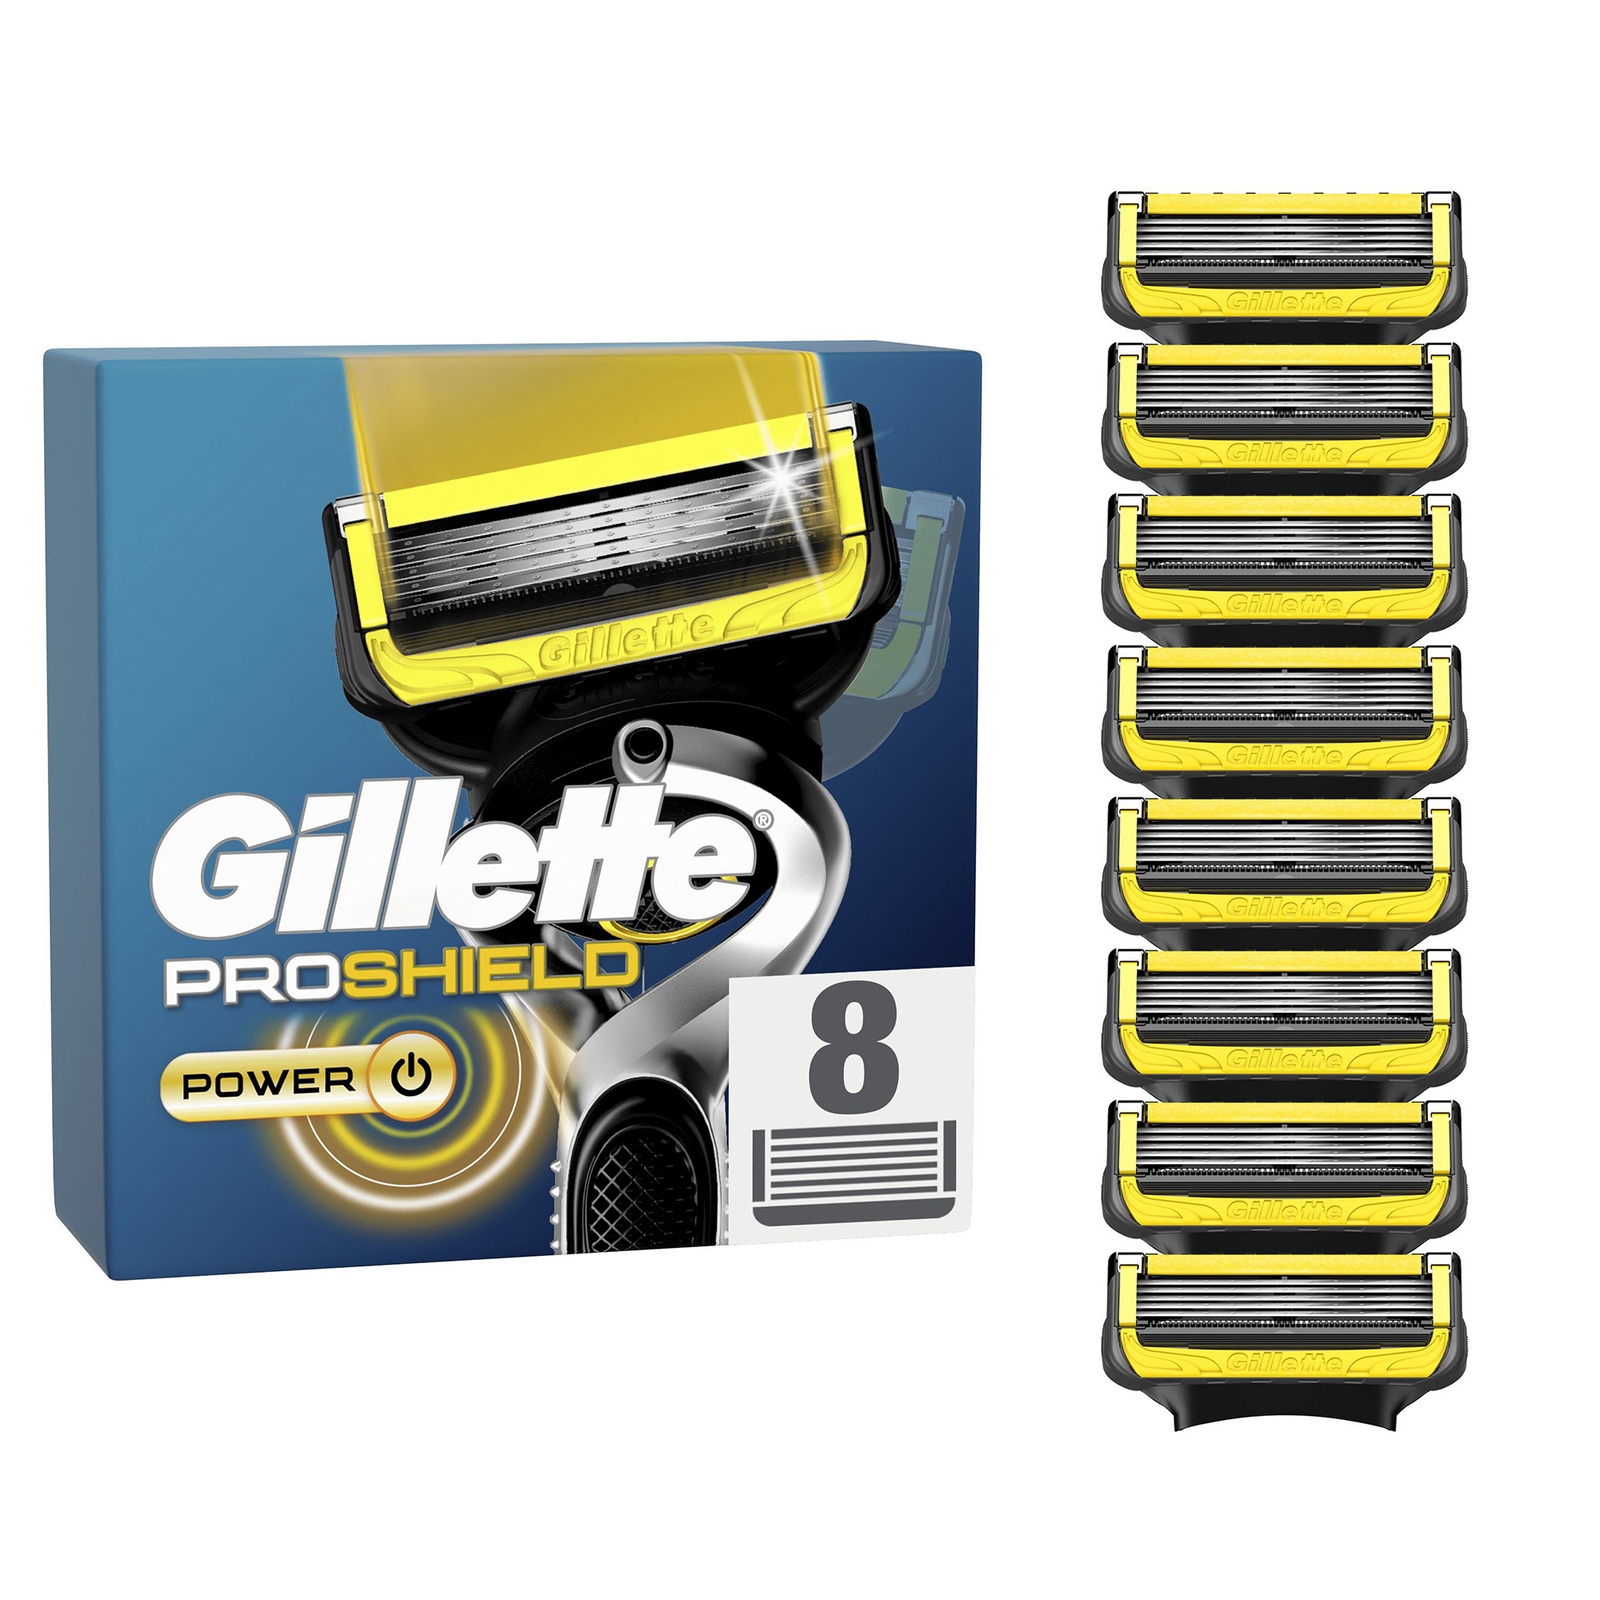 Gillette ProShield Power Razor Blades - 8 Pack